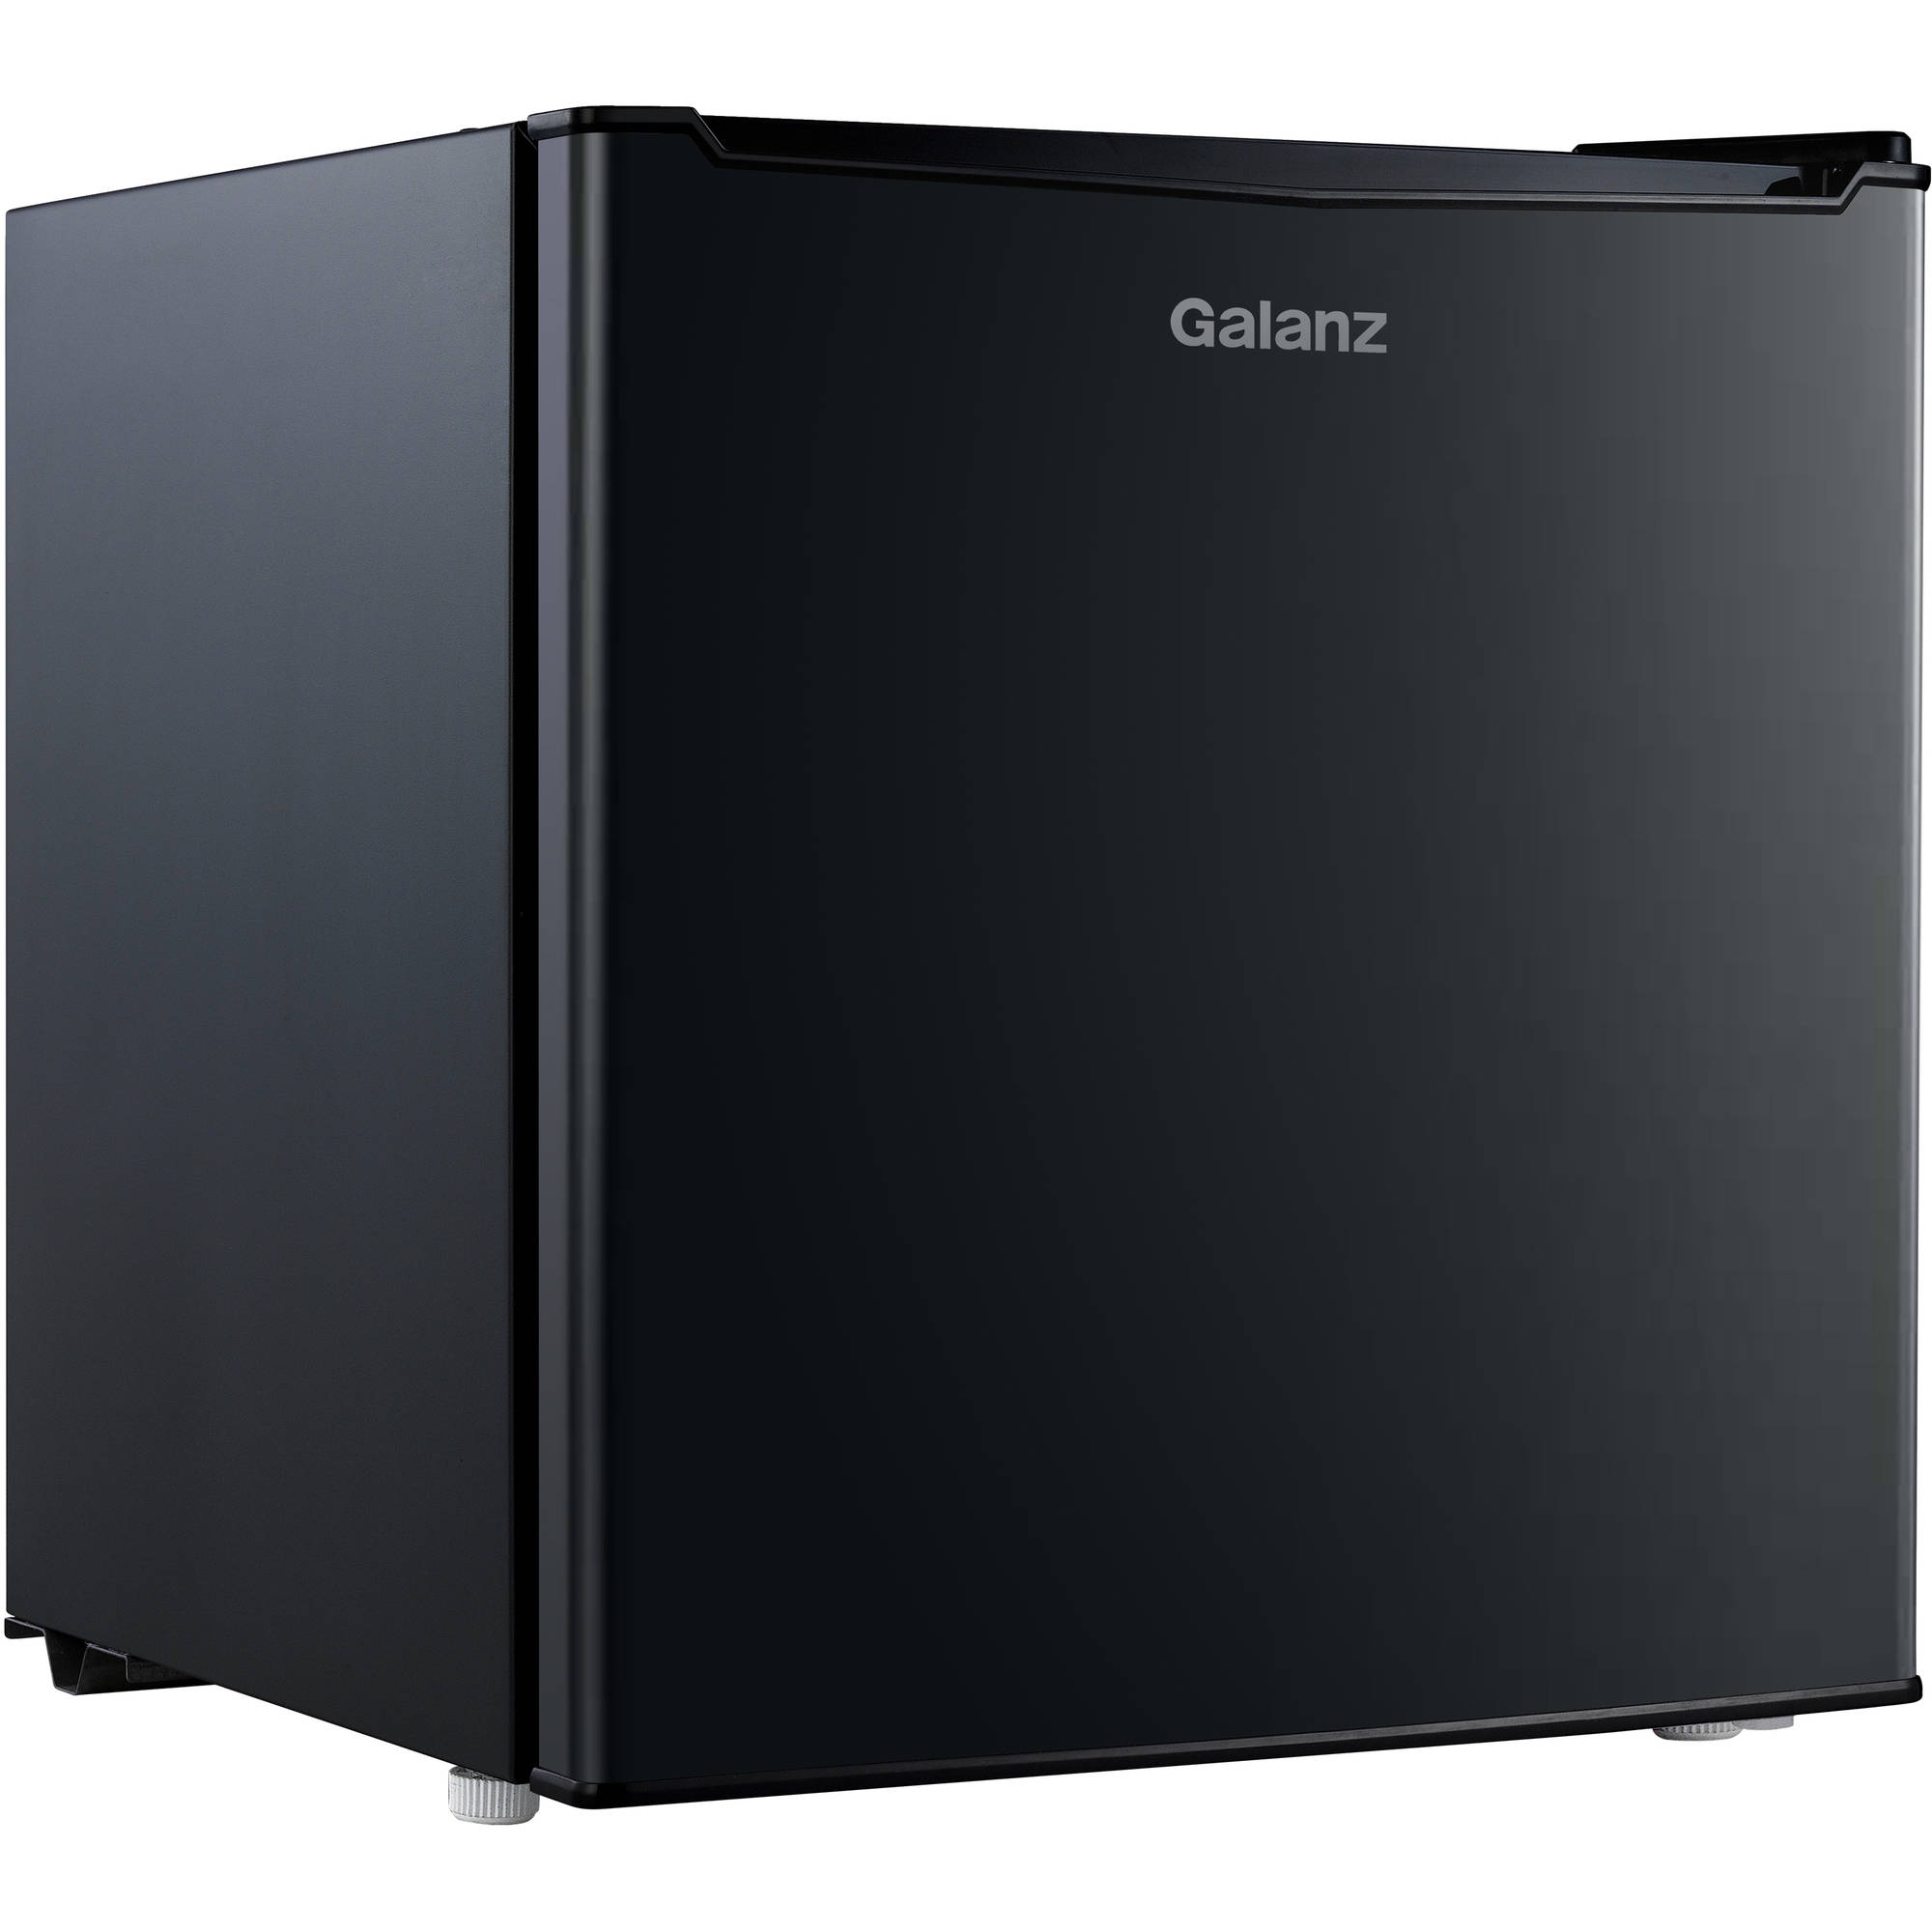 Galanz 1.7 Cu ft Single Door Mini Fridge GL17BK, Black, New - image 1 of 7